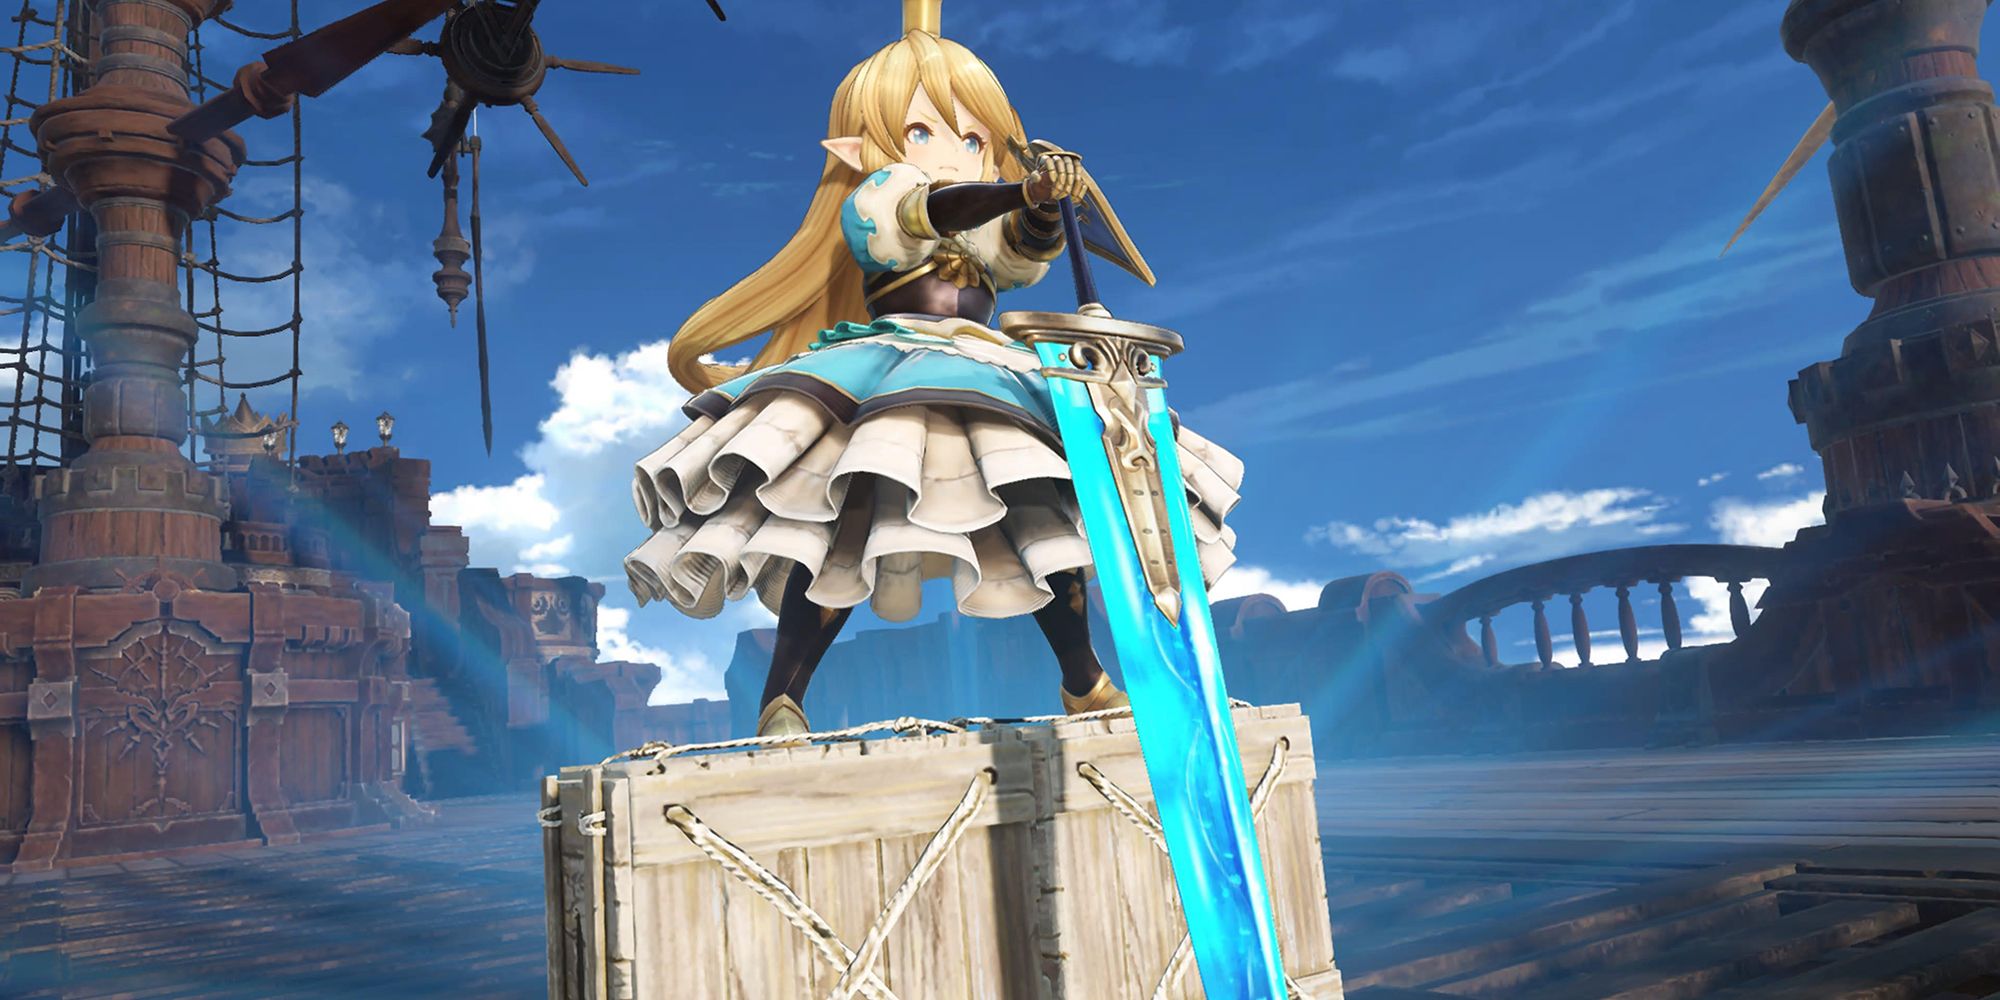 charlotta standing on a box wielding her sword